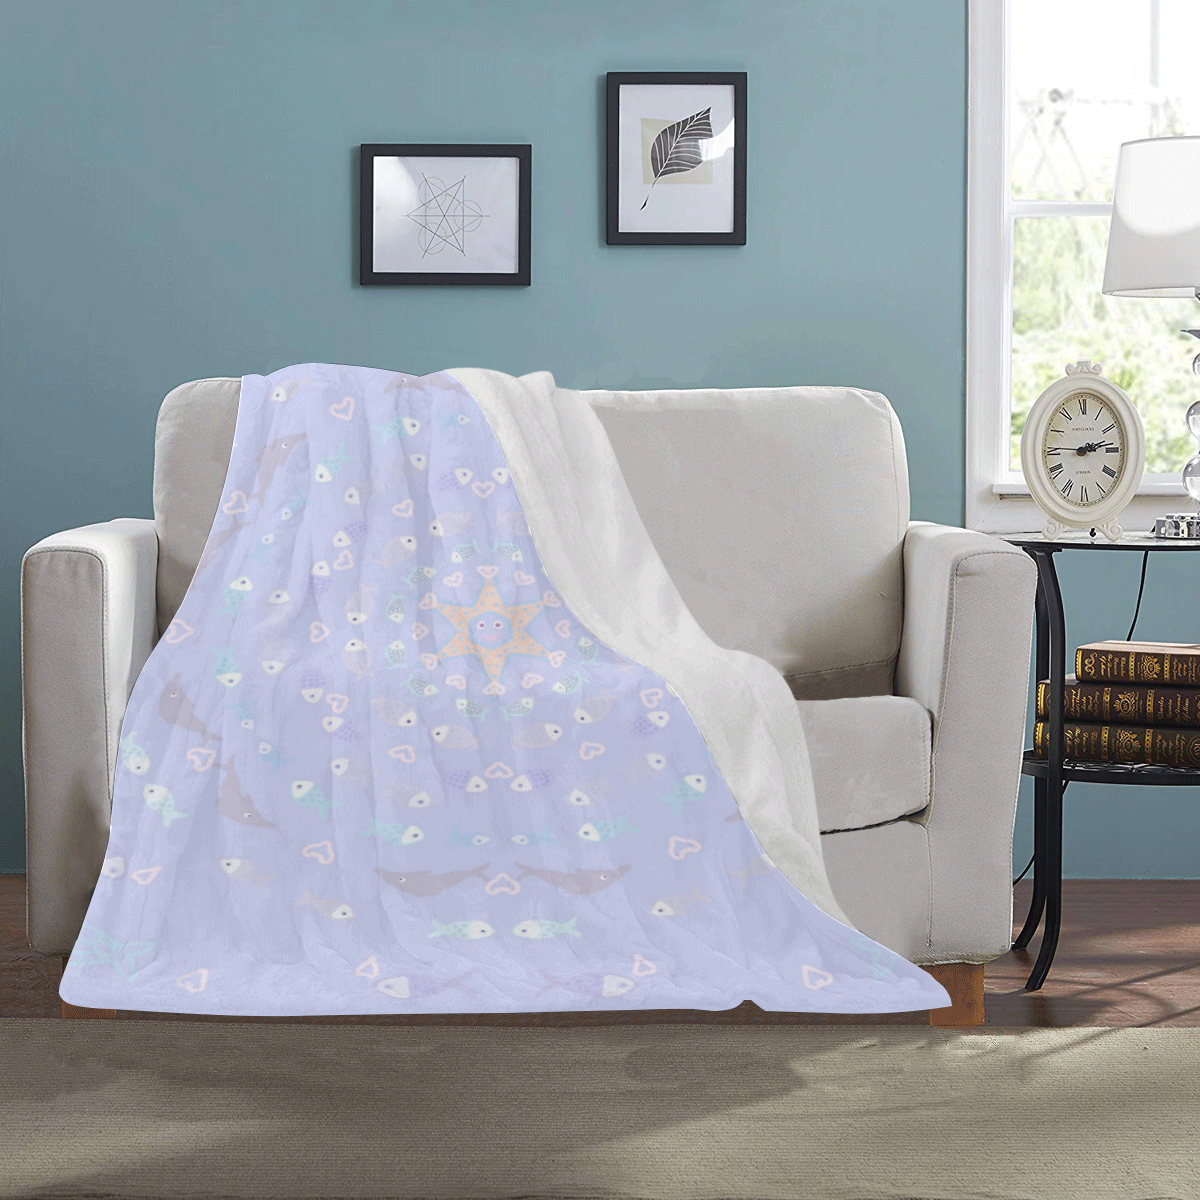 ezra4 Ultra-Soft Micro Fleece Blanket 30''x40''